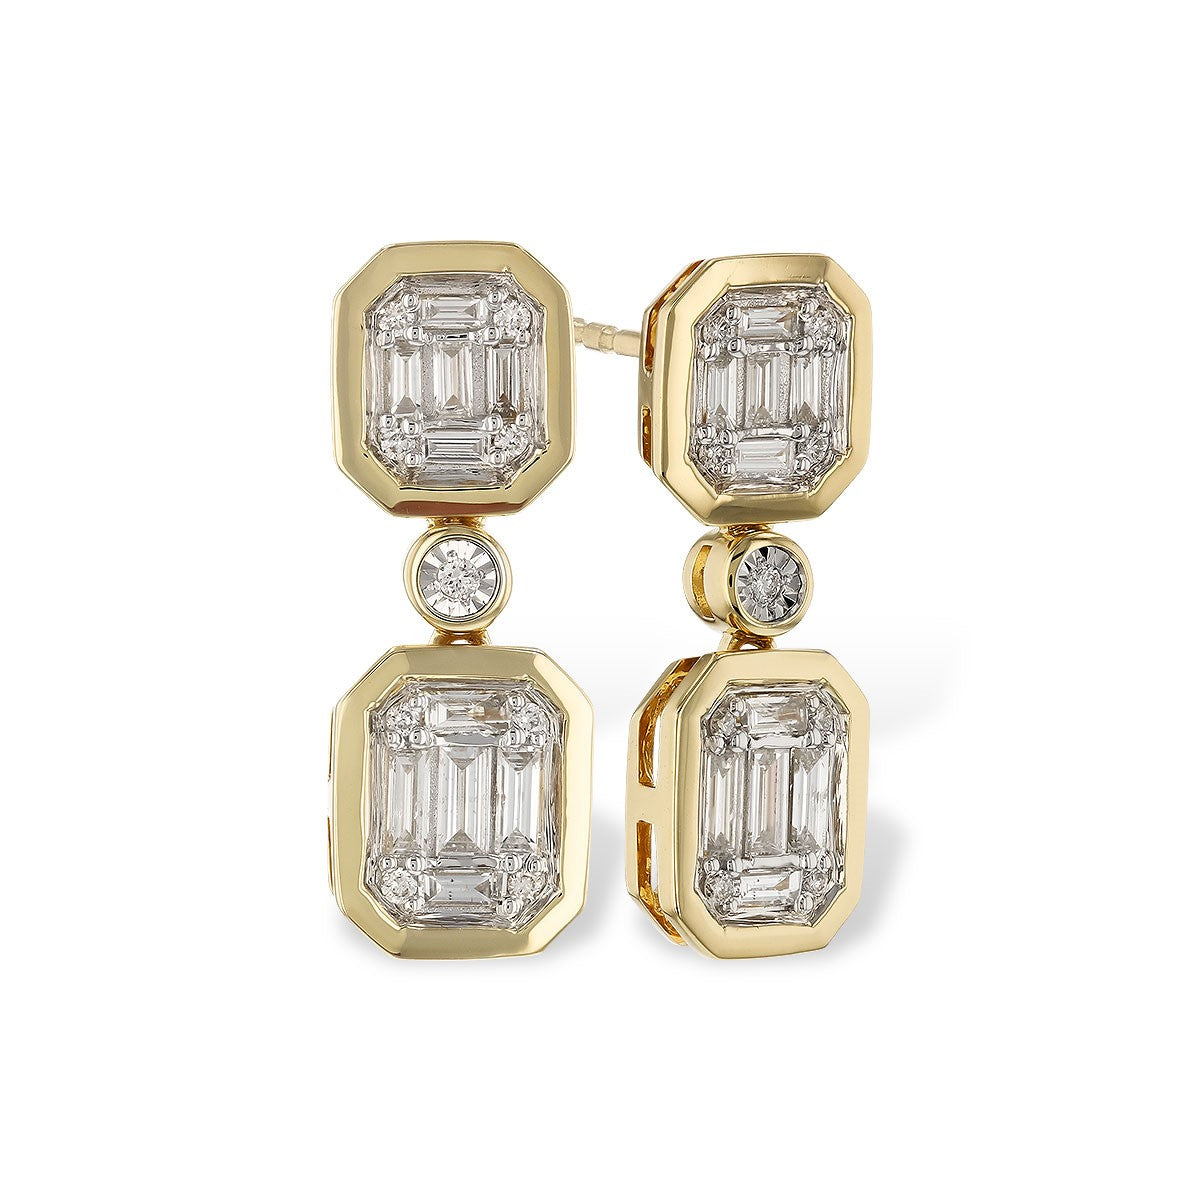 Allison Kaufman Co. 14KY Drop Diamond Earrings E2227